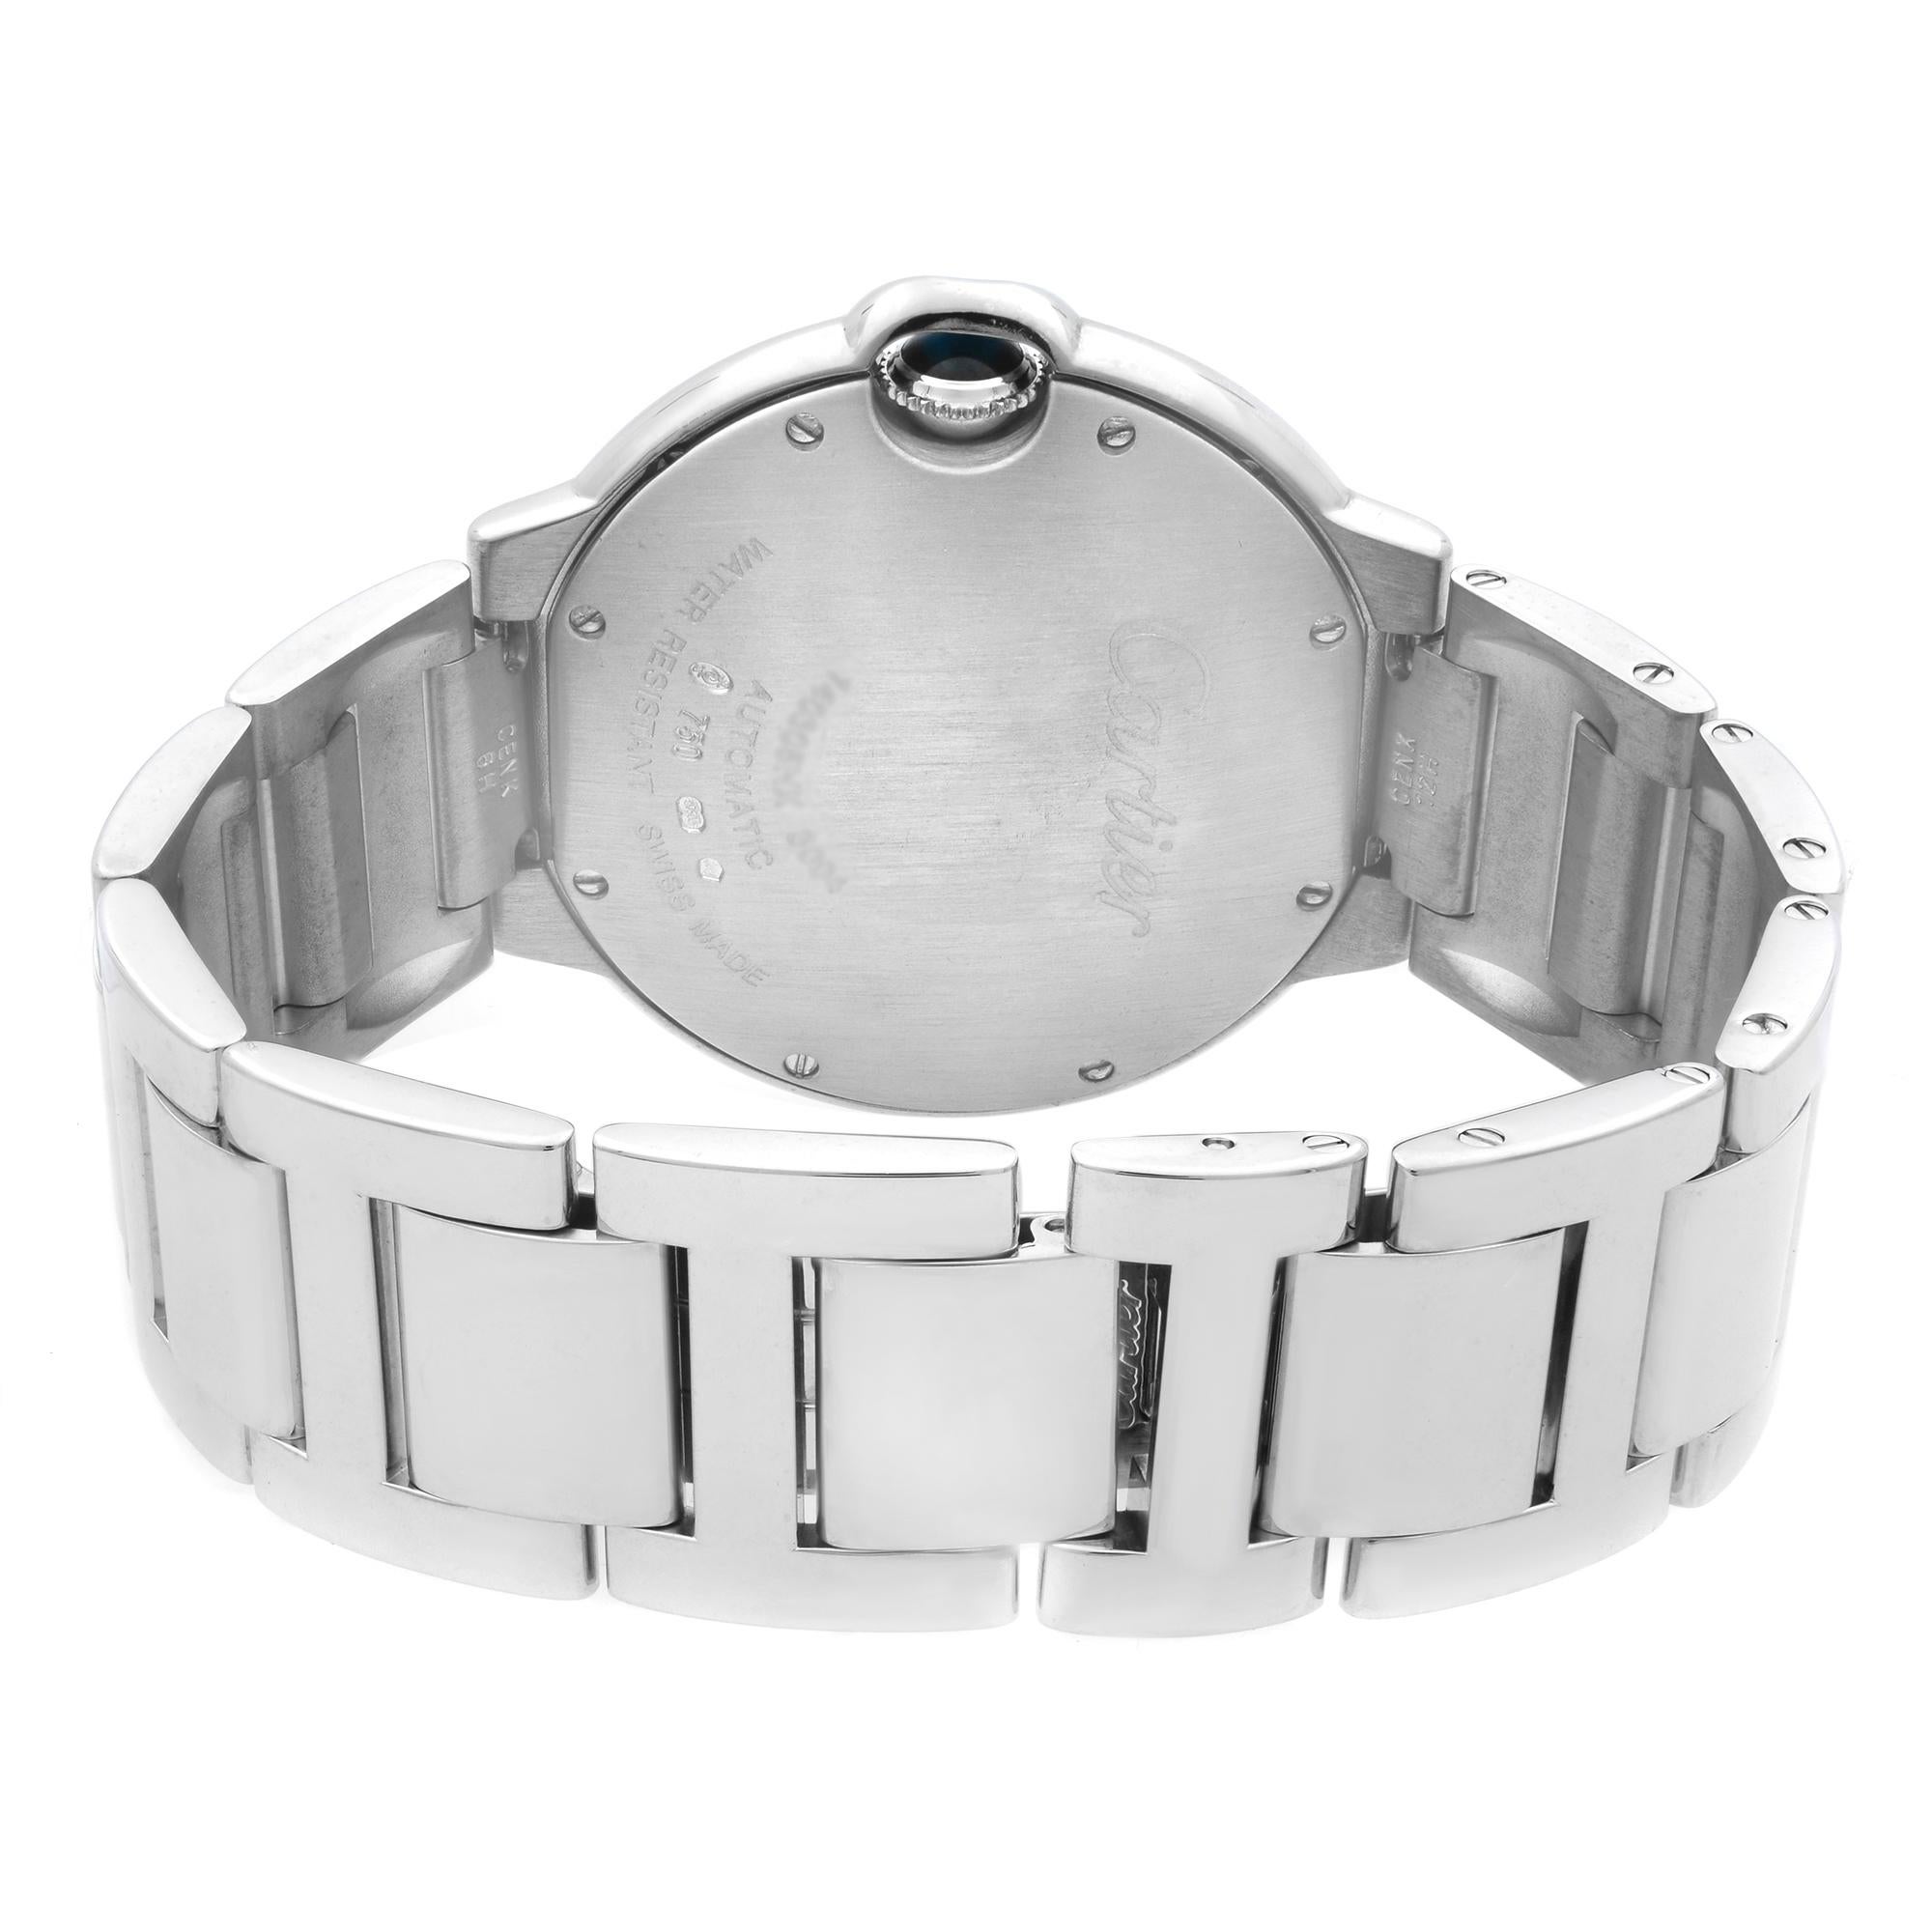 Cartier Ballon Bleu White Gold Diamond Bezel Silver Dial Watch WE9006Z3 1